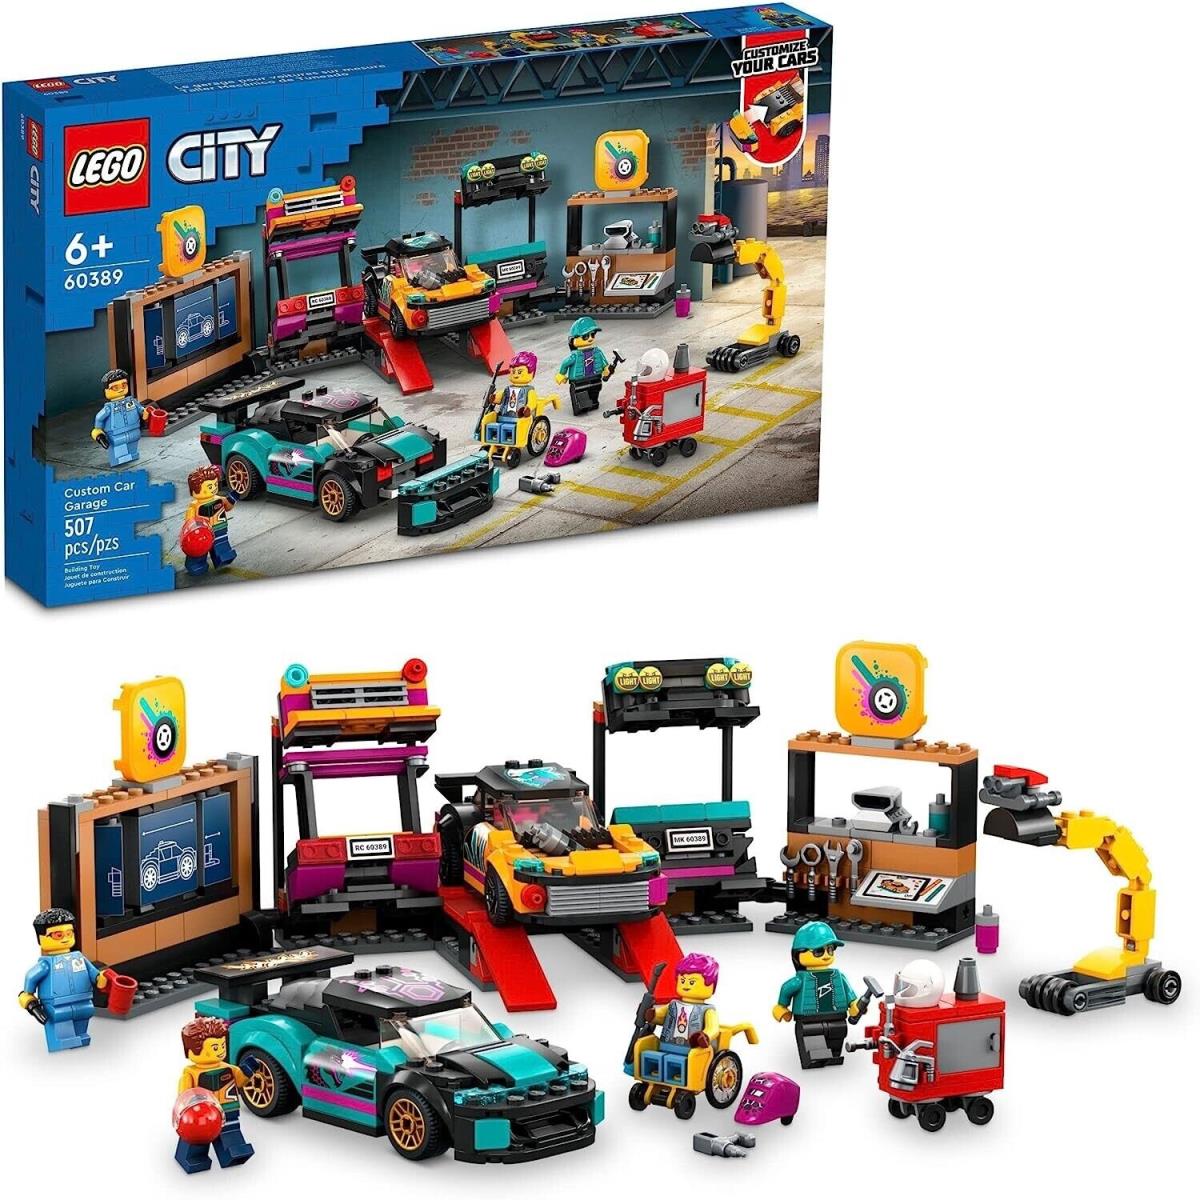 Lego City 60389 Custom Car Garage Mechanic Workshop Toy Set with Minifigures